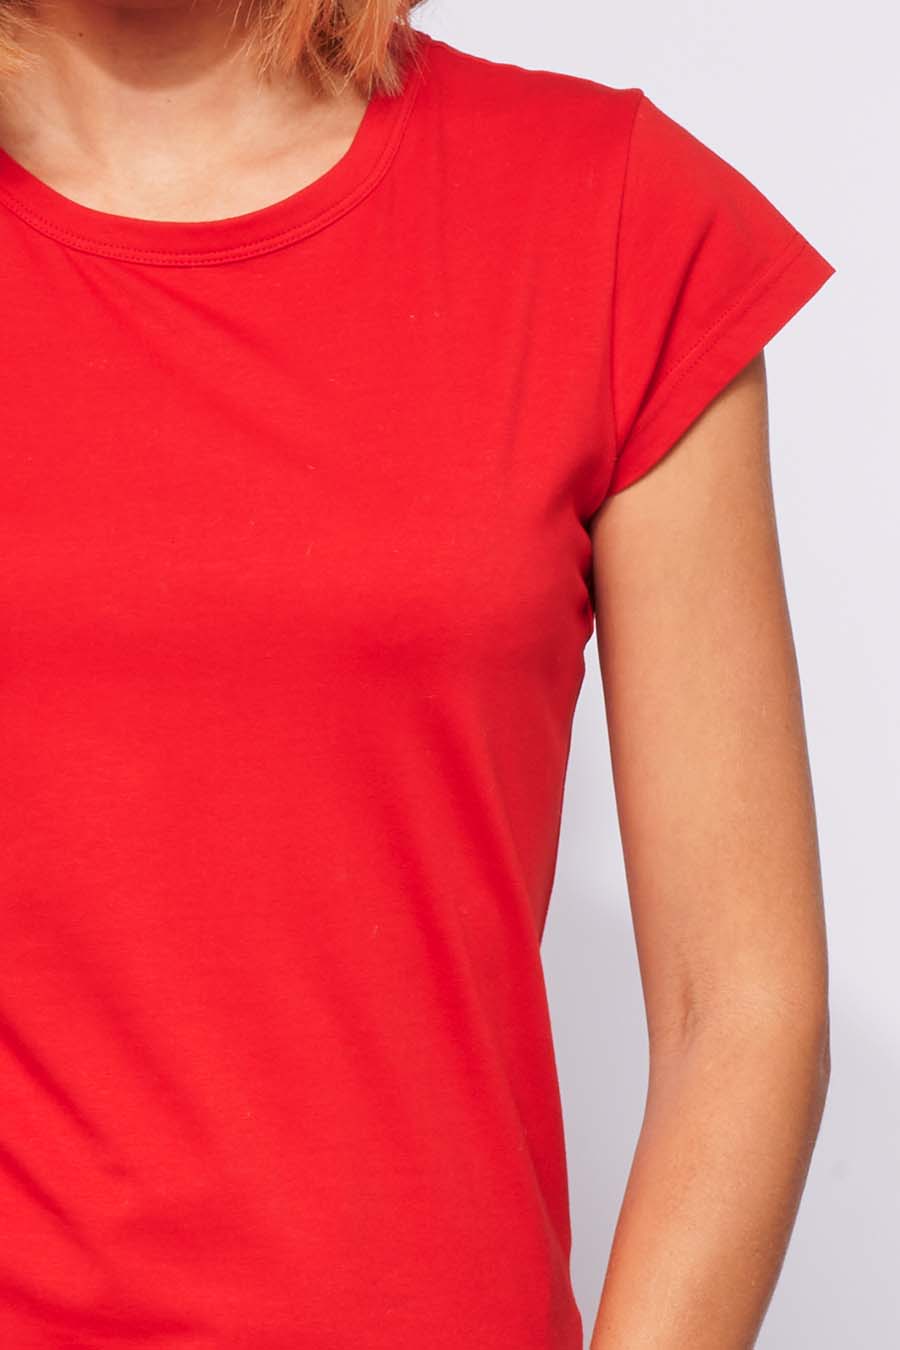 zoom tee-shirt Femme made in France en coton bio LOUISON rouge - FIL ROUGE